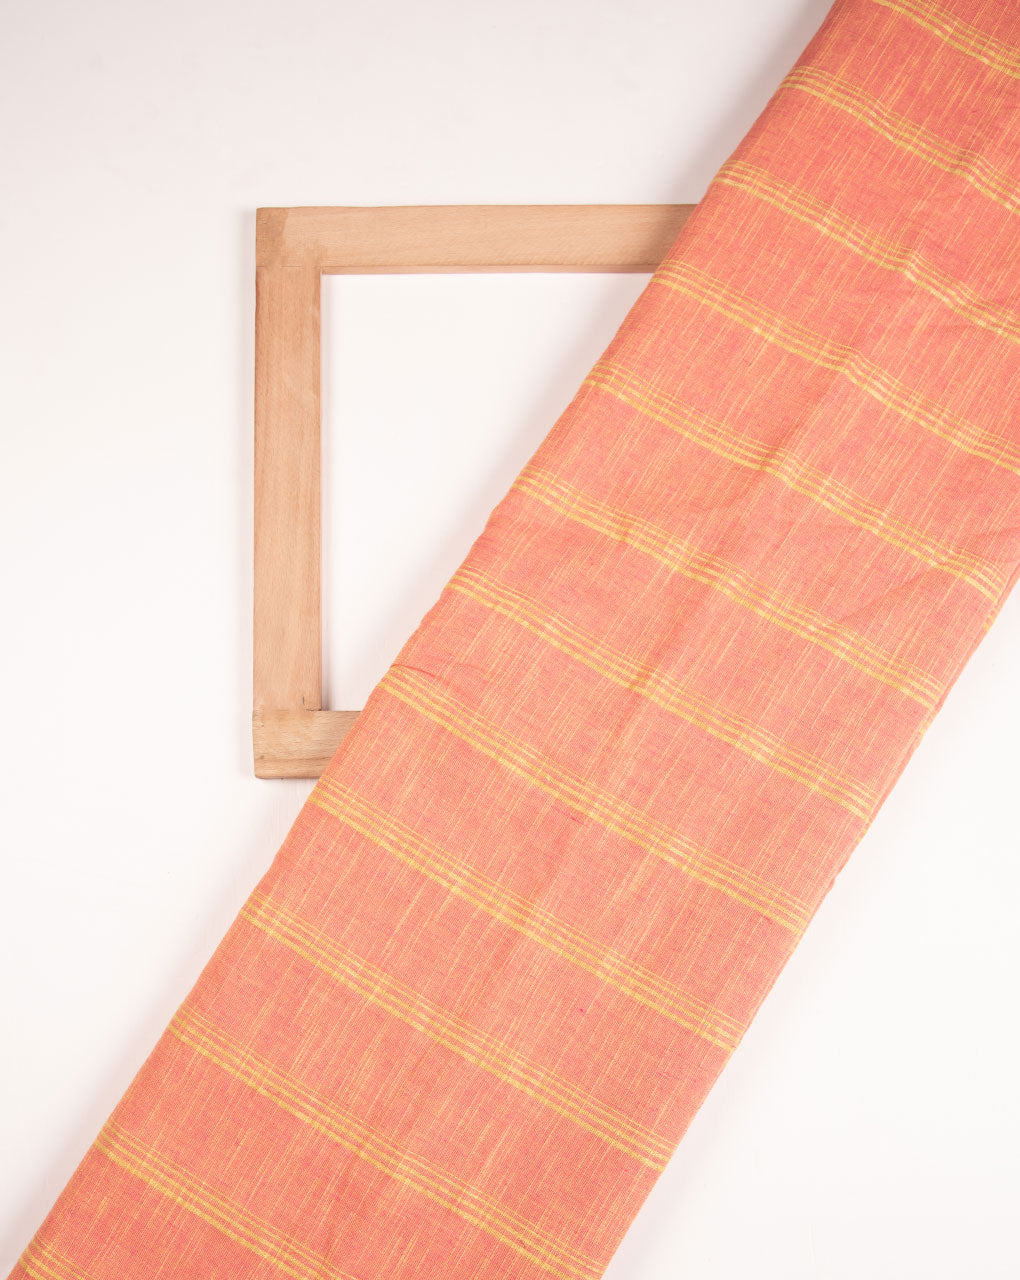 Woven Zari Loom Textured Cotton Fabric - Fabriclore.com